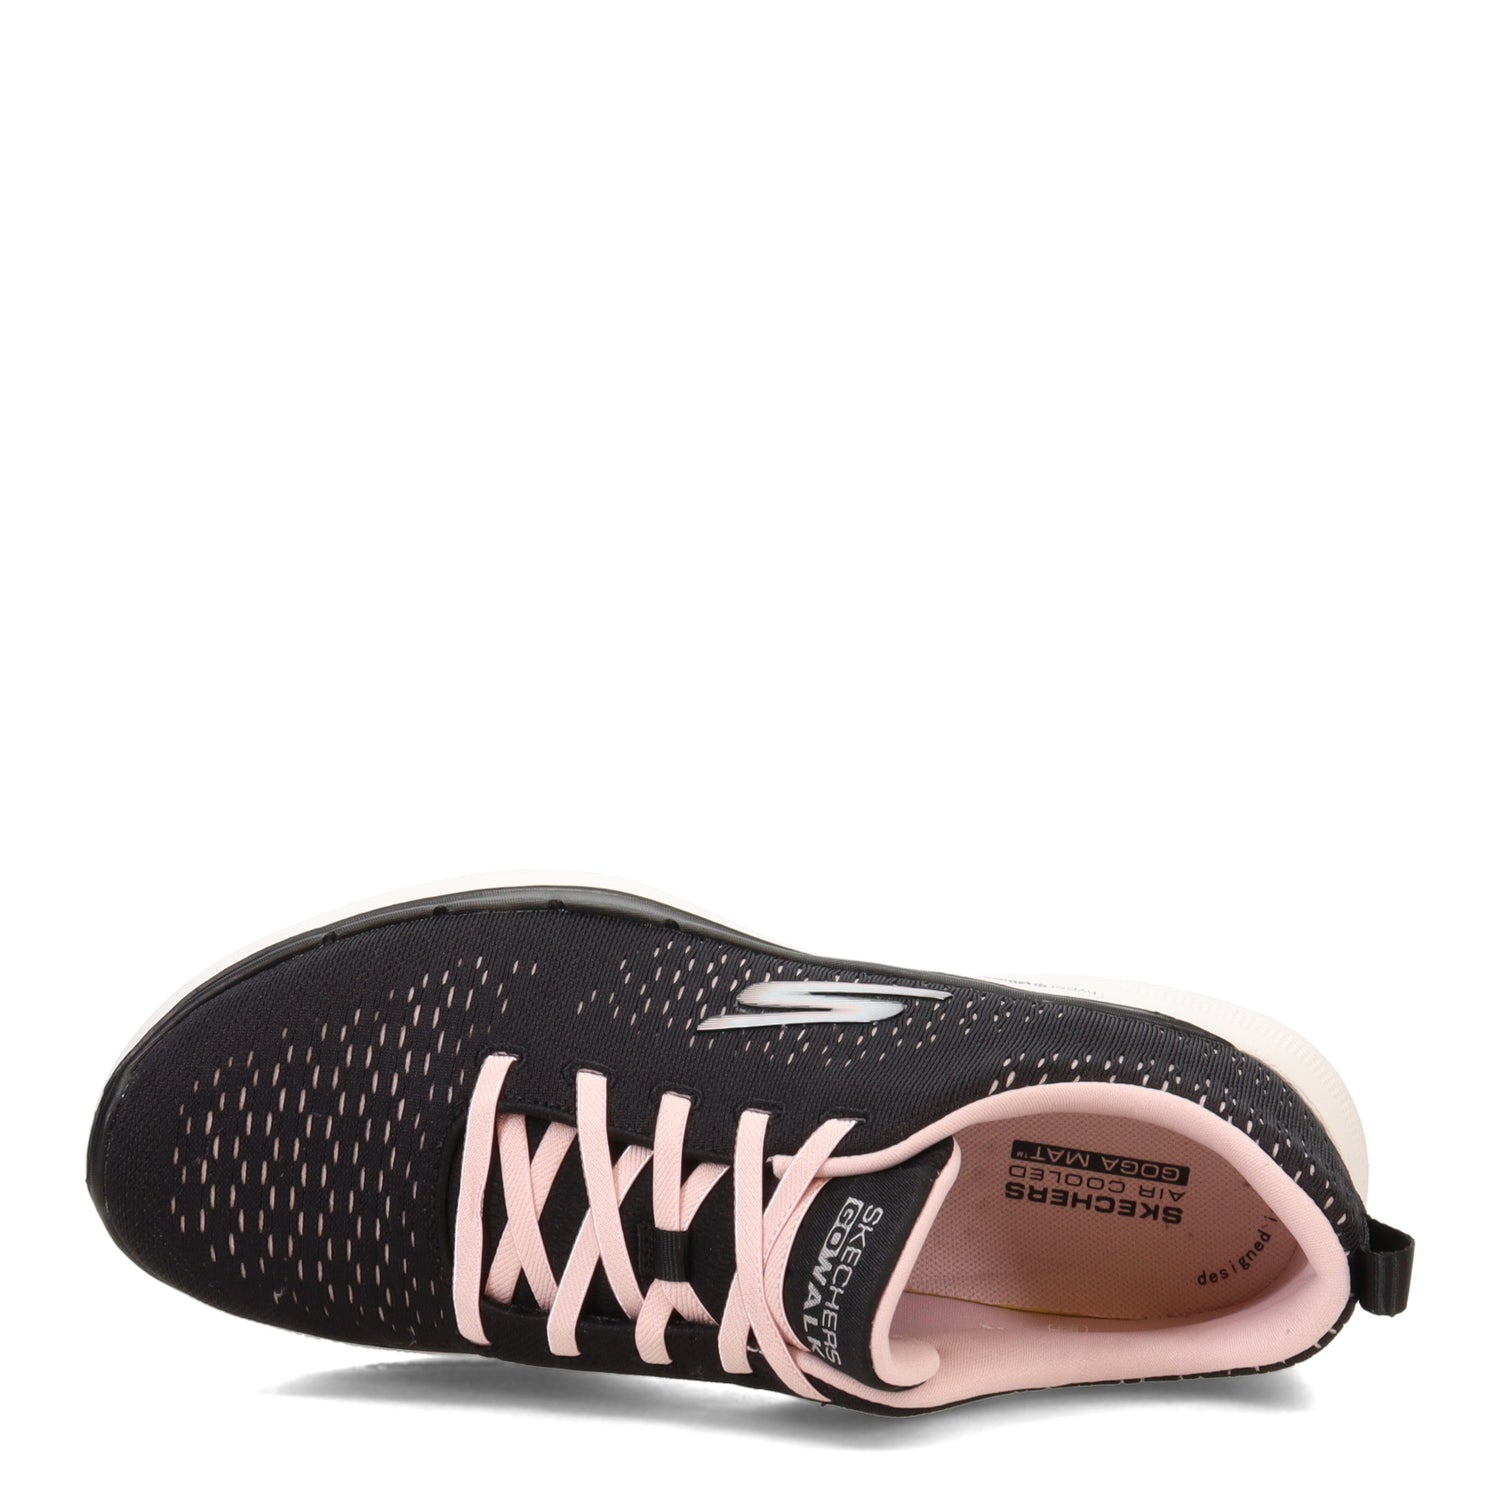 Peltz Shoes  Women's Skechers GO WALK 6 - Adora Walking Shoe BLACK PINK 124524-BKLP